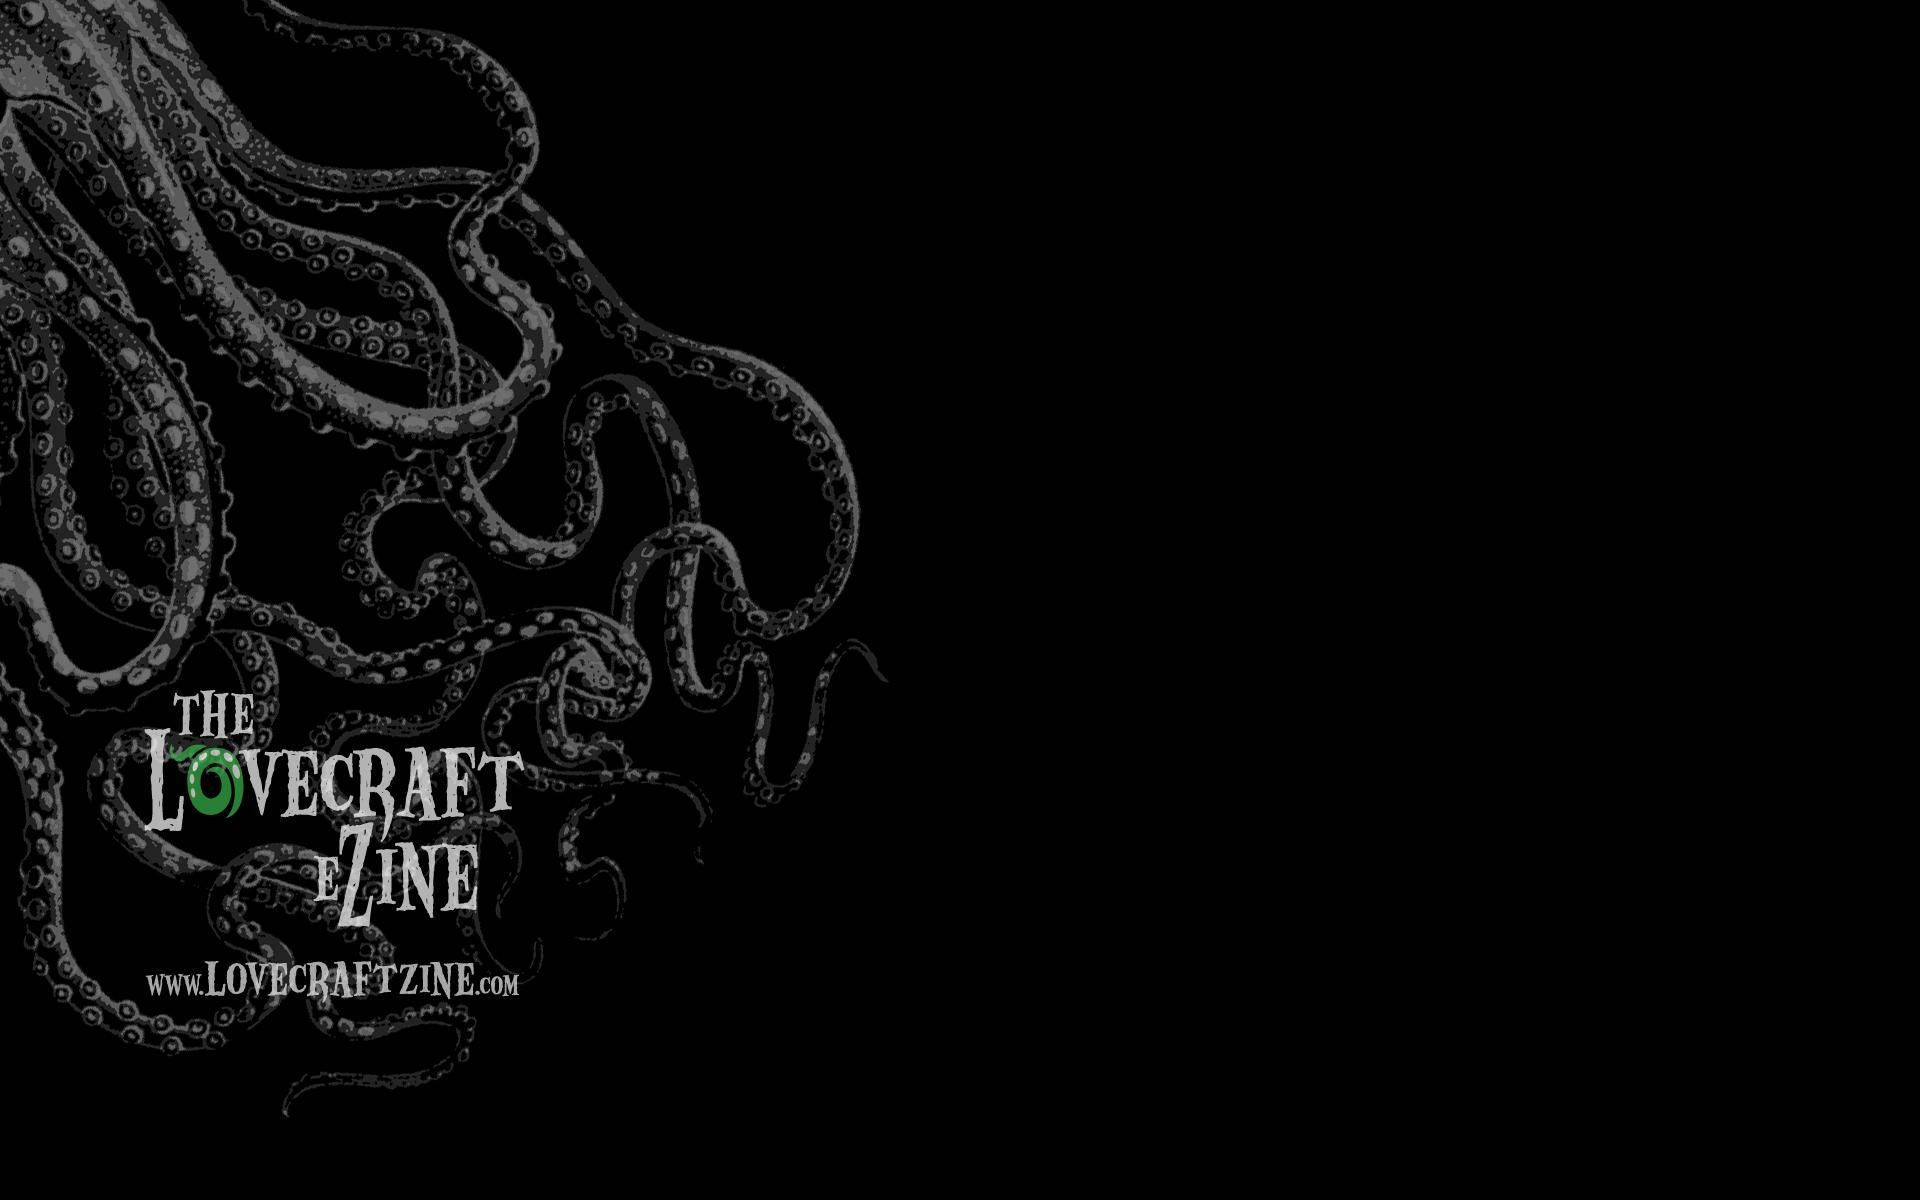 Lovecraft Ezine Background